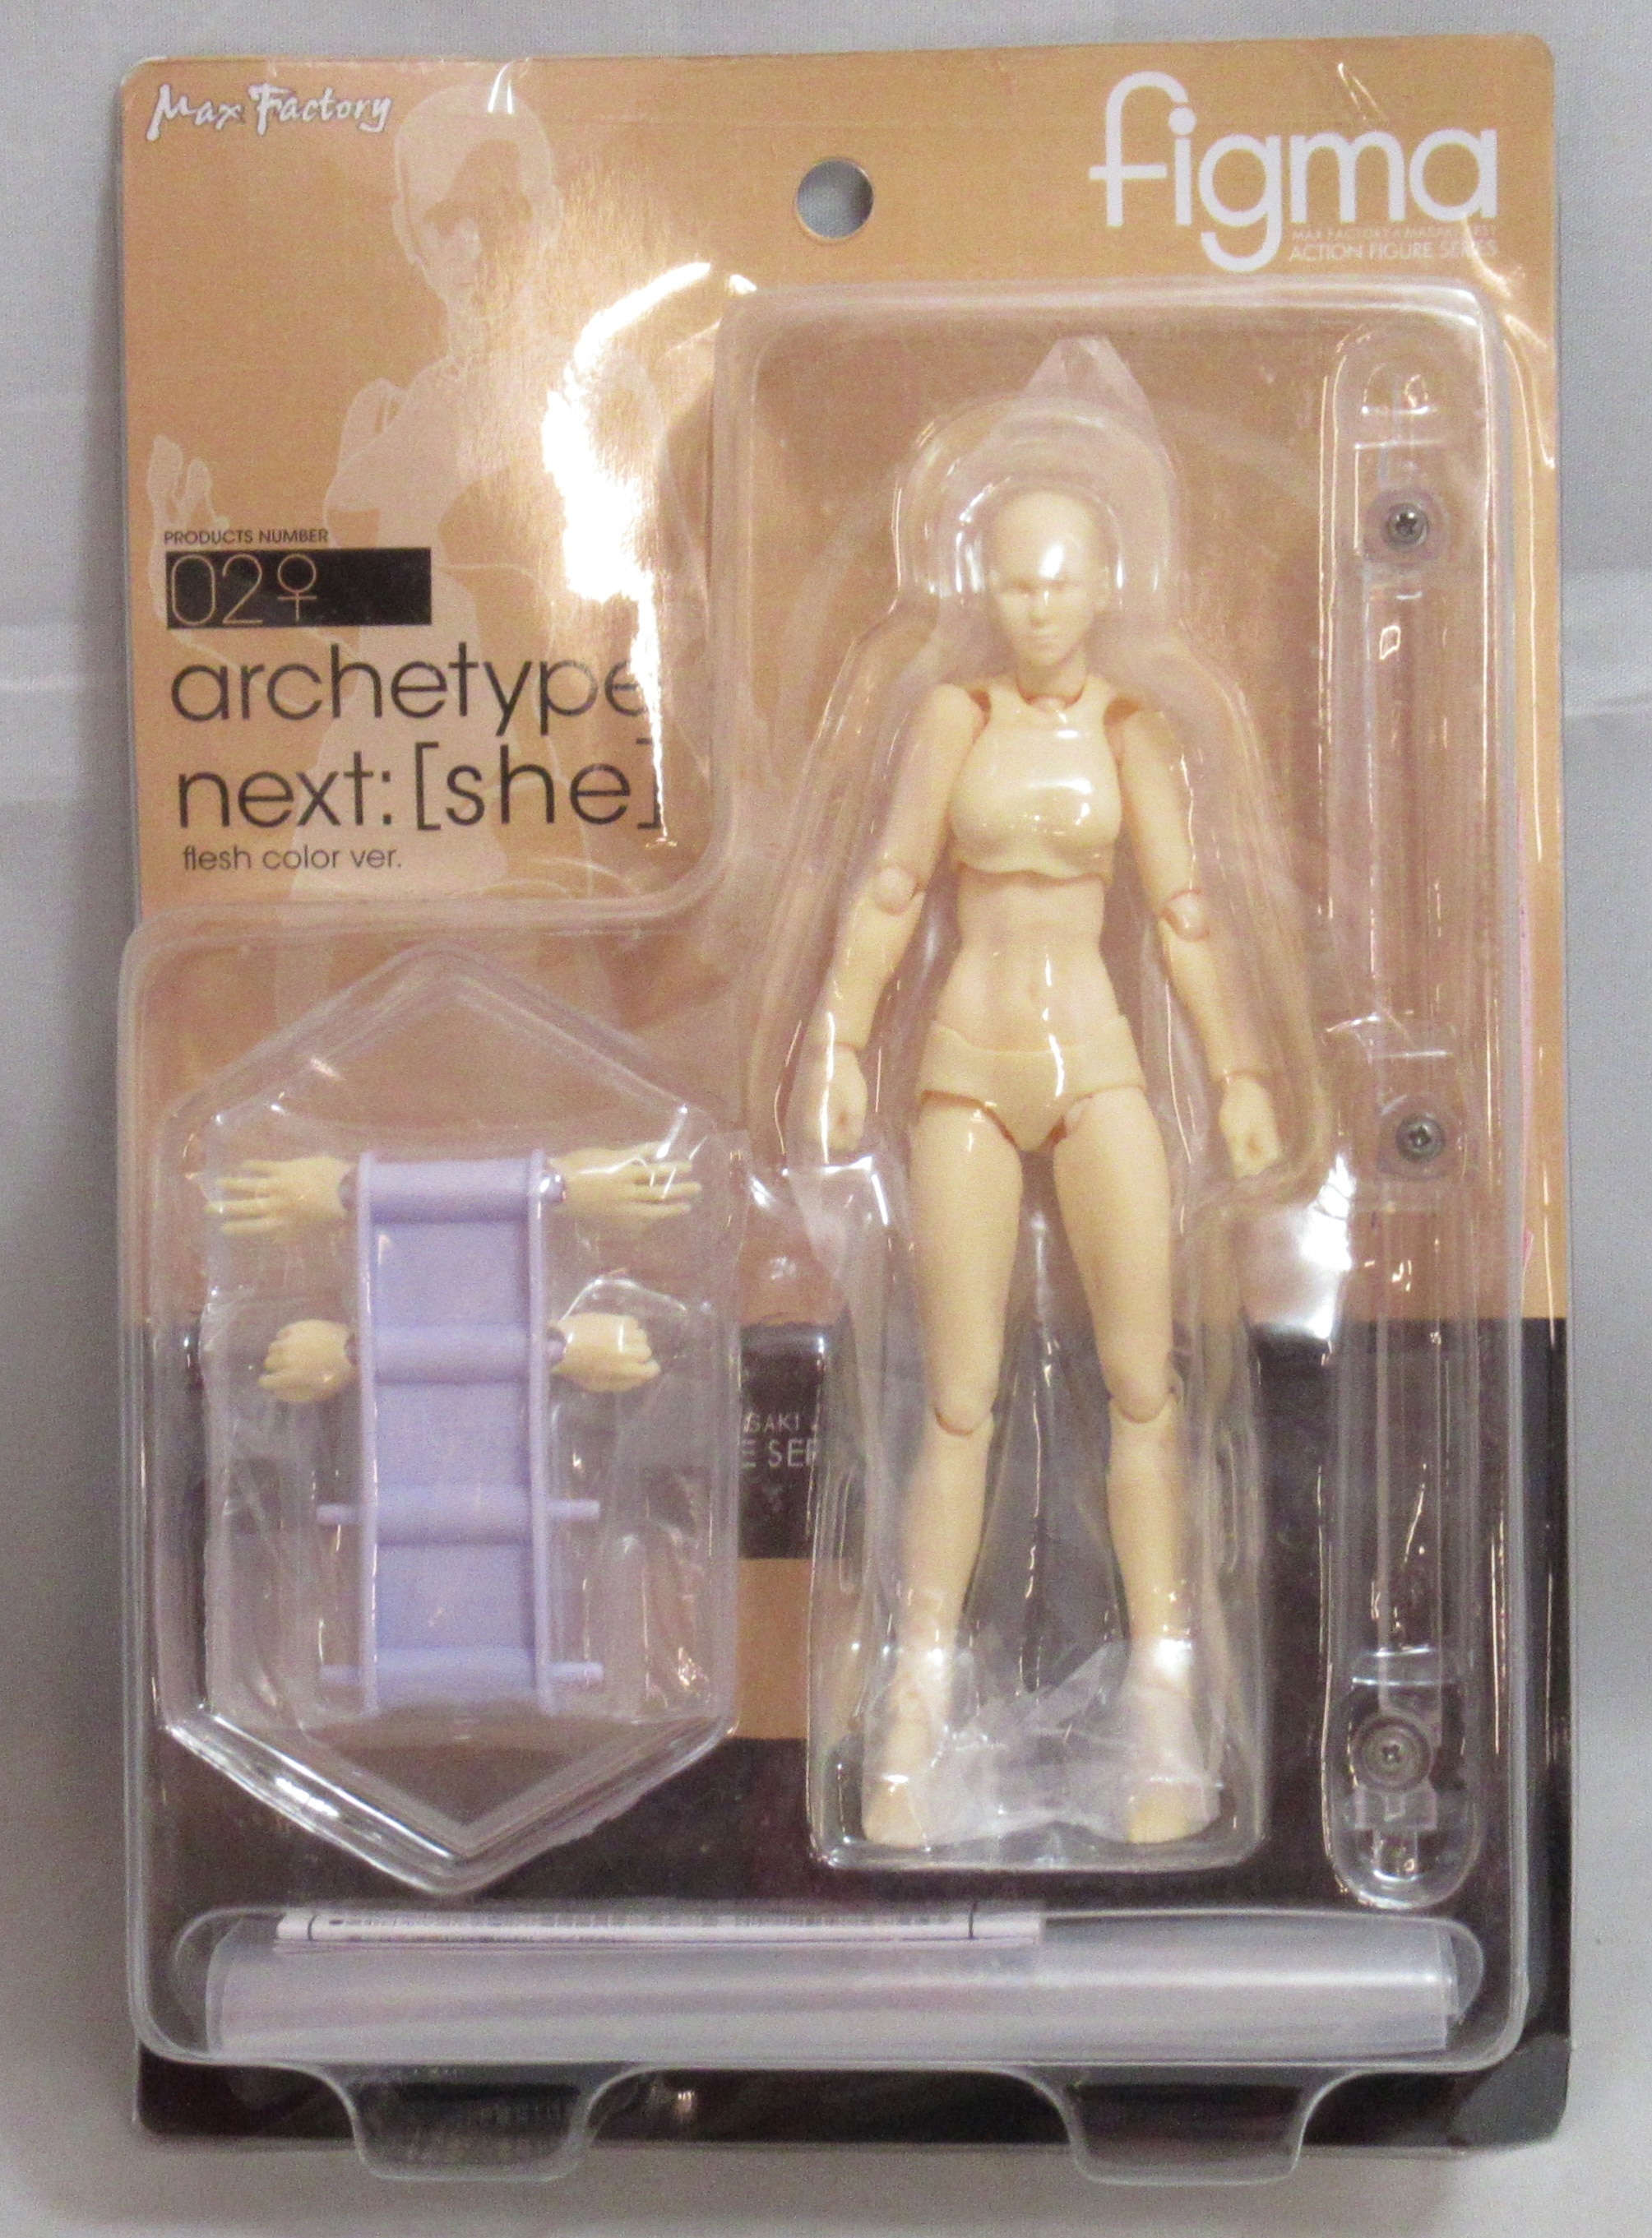 figma(フィグマ) 02♀ archetype next:she(アーキタイプネクスト シー) flesh color ver. 完成品 可動フィギュア マックスファクトリー